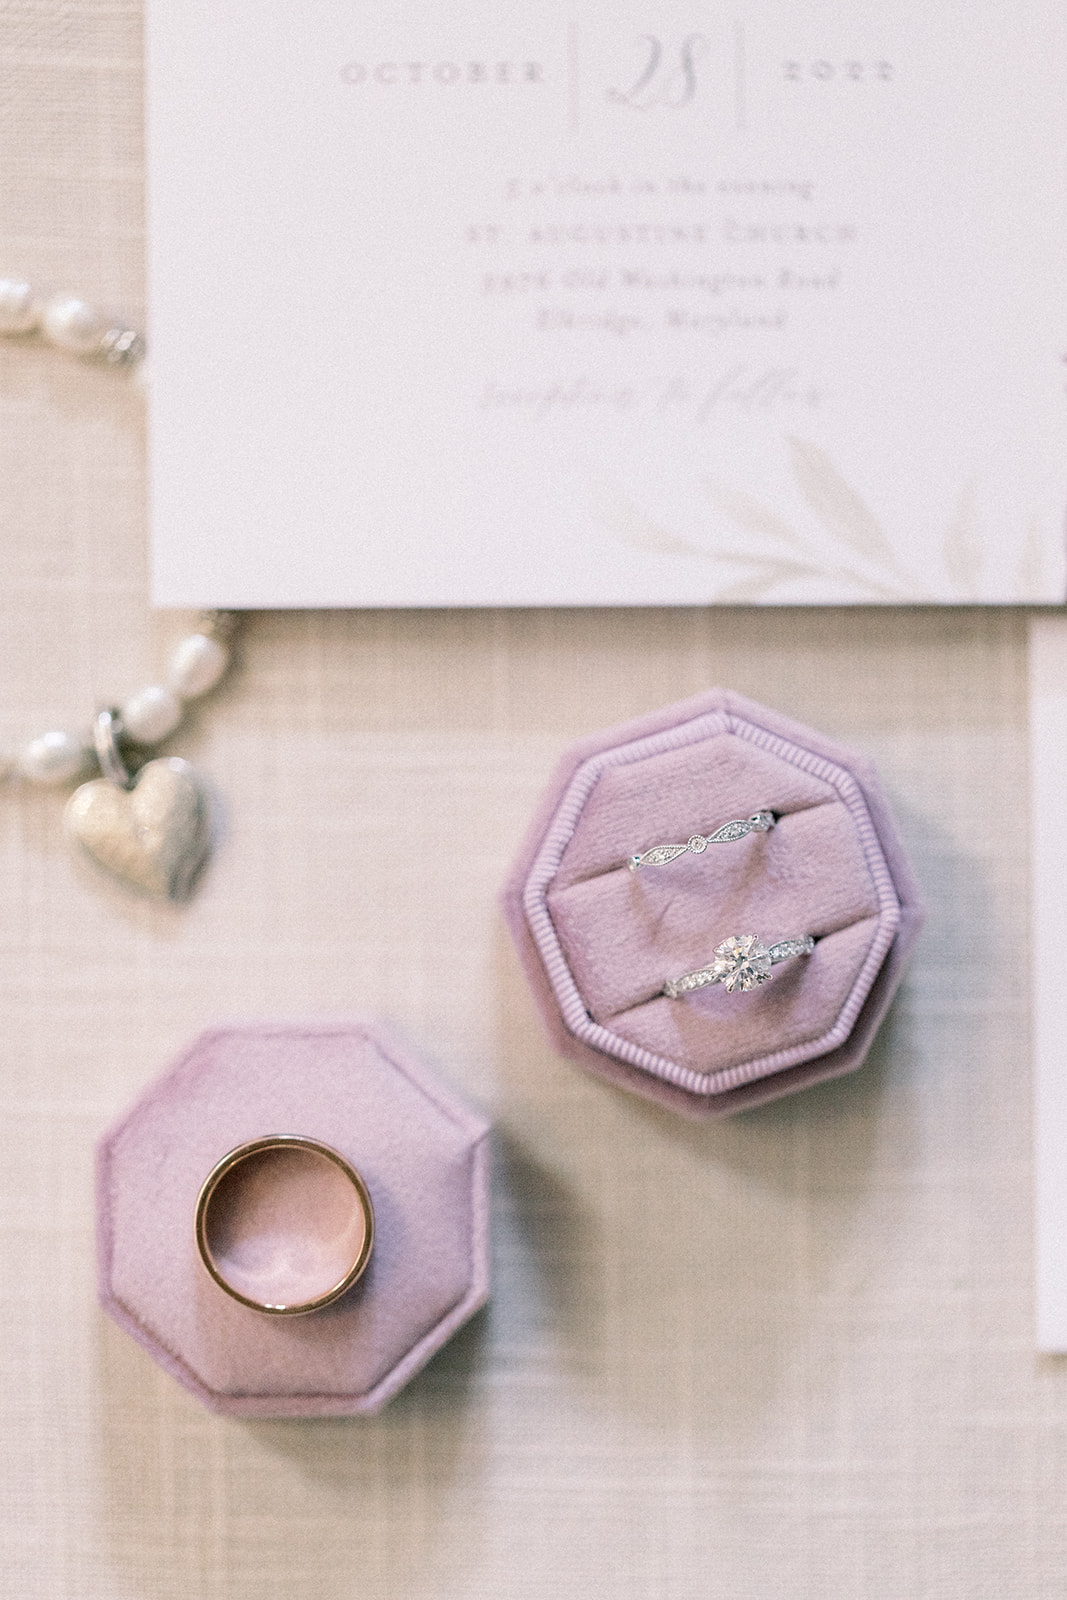 Pennsylvania wedding photographer captures lavender wedding invitations and ring box